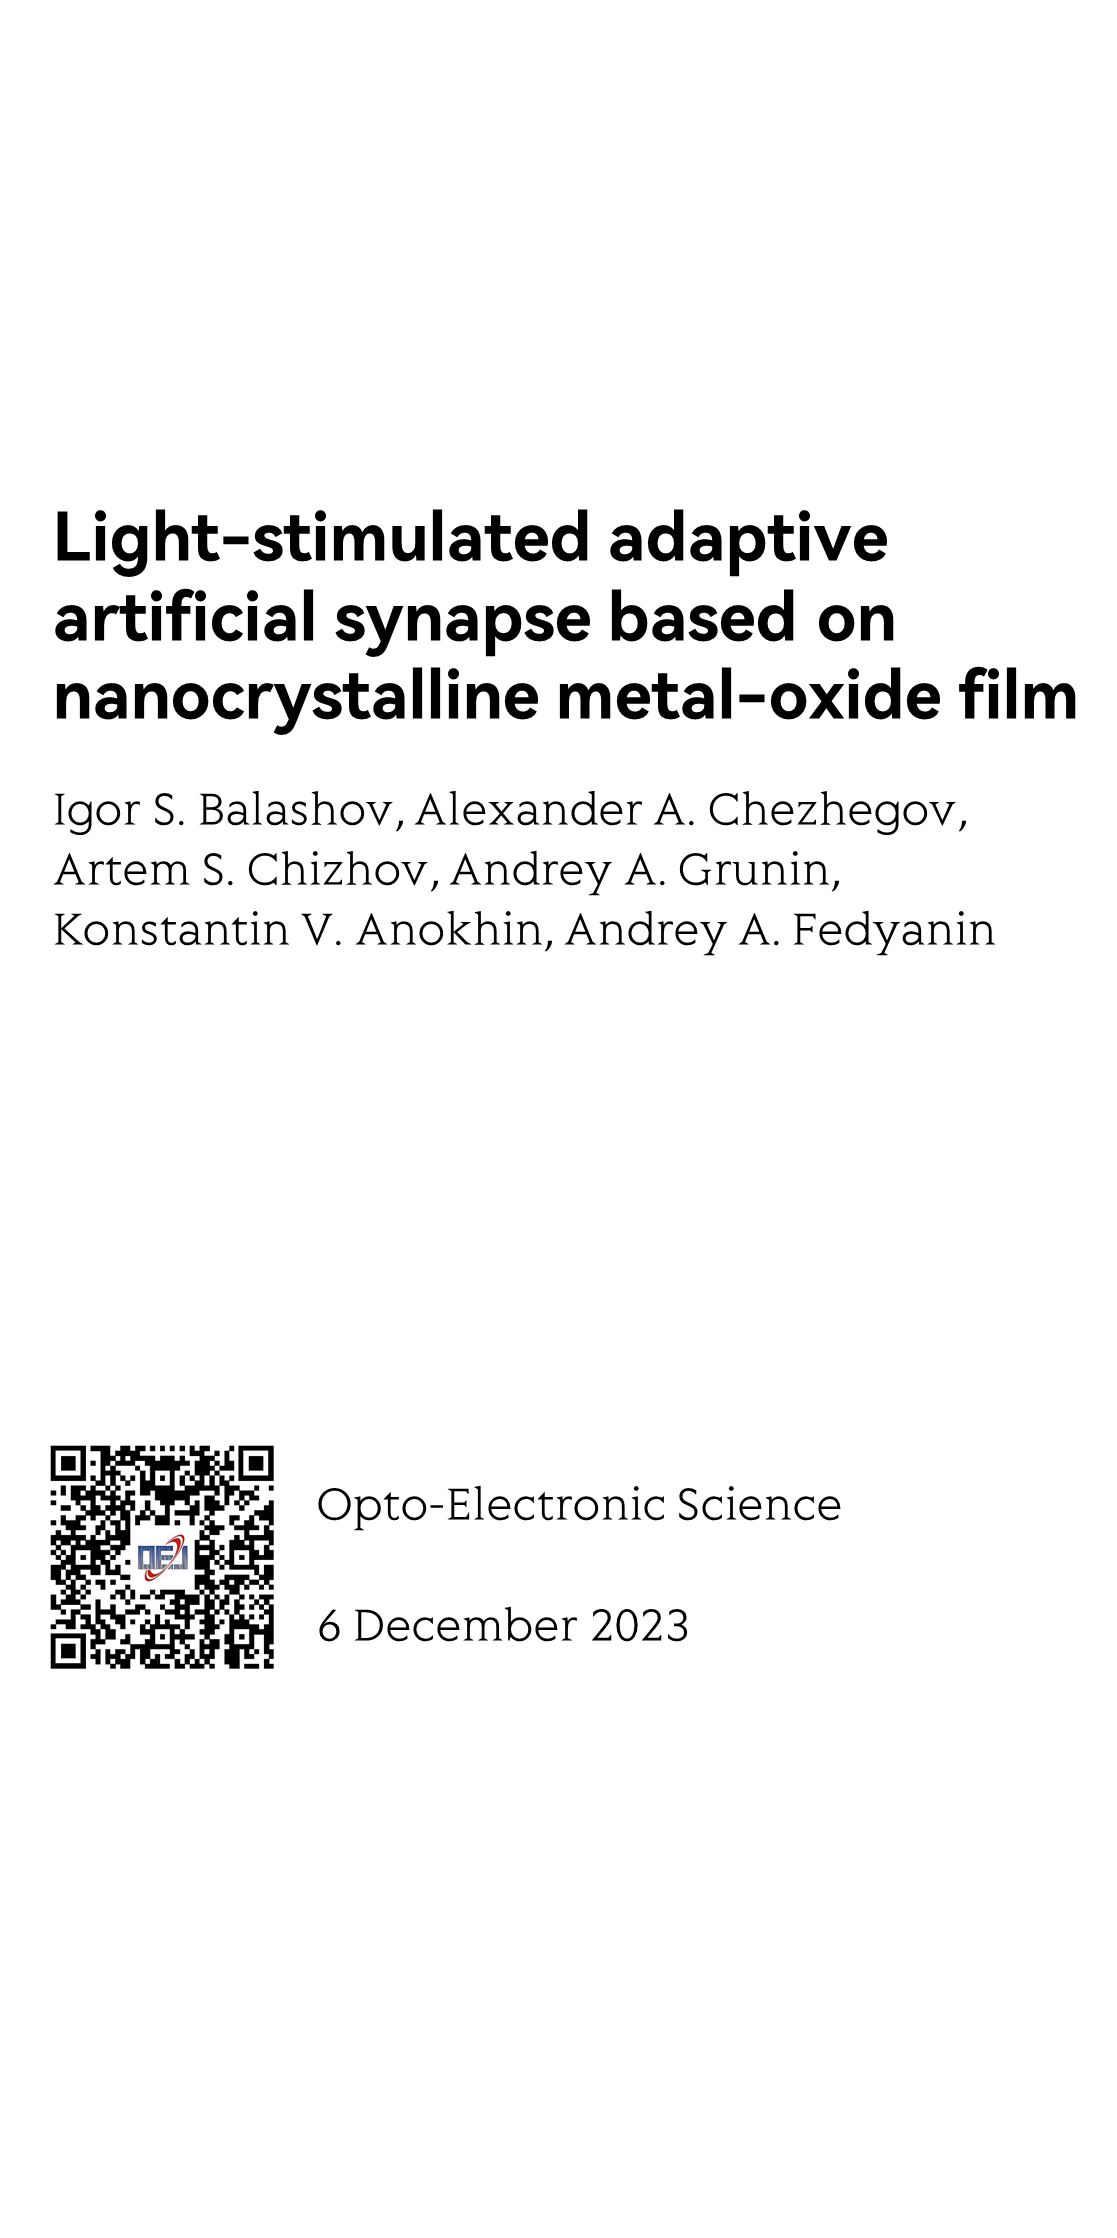 Light-stimulated adaptive artificial synapse based on nanocrystalline metal-oxide film_1